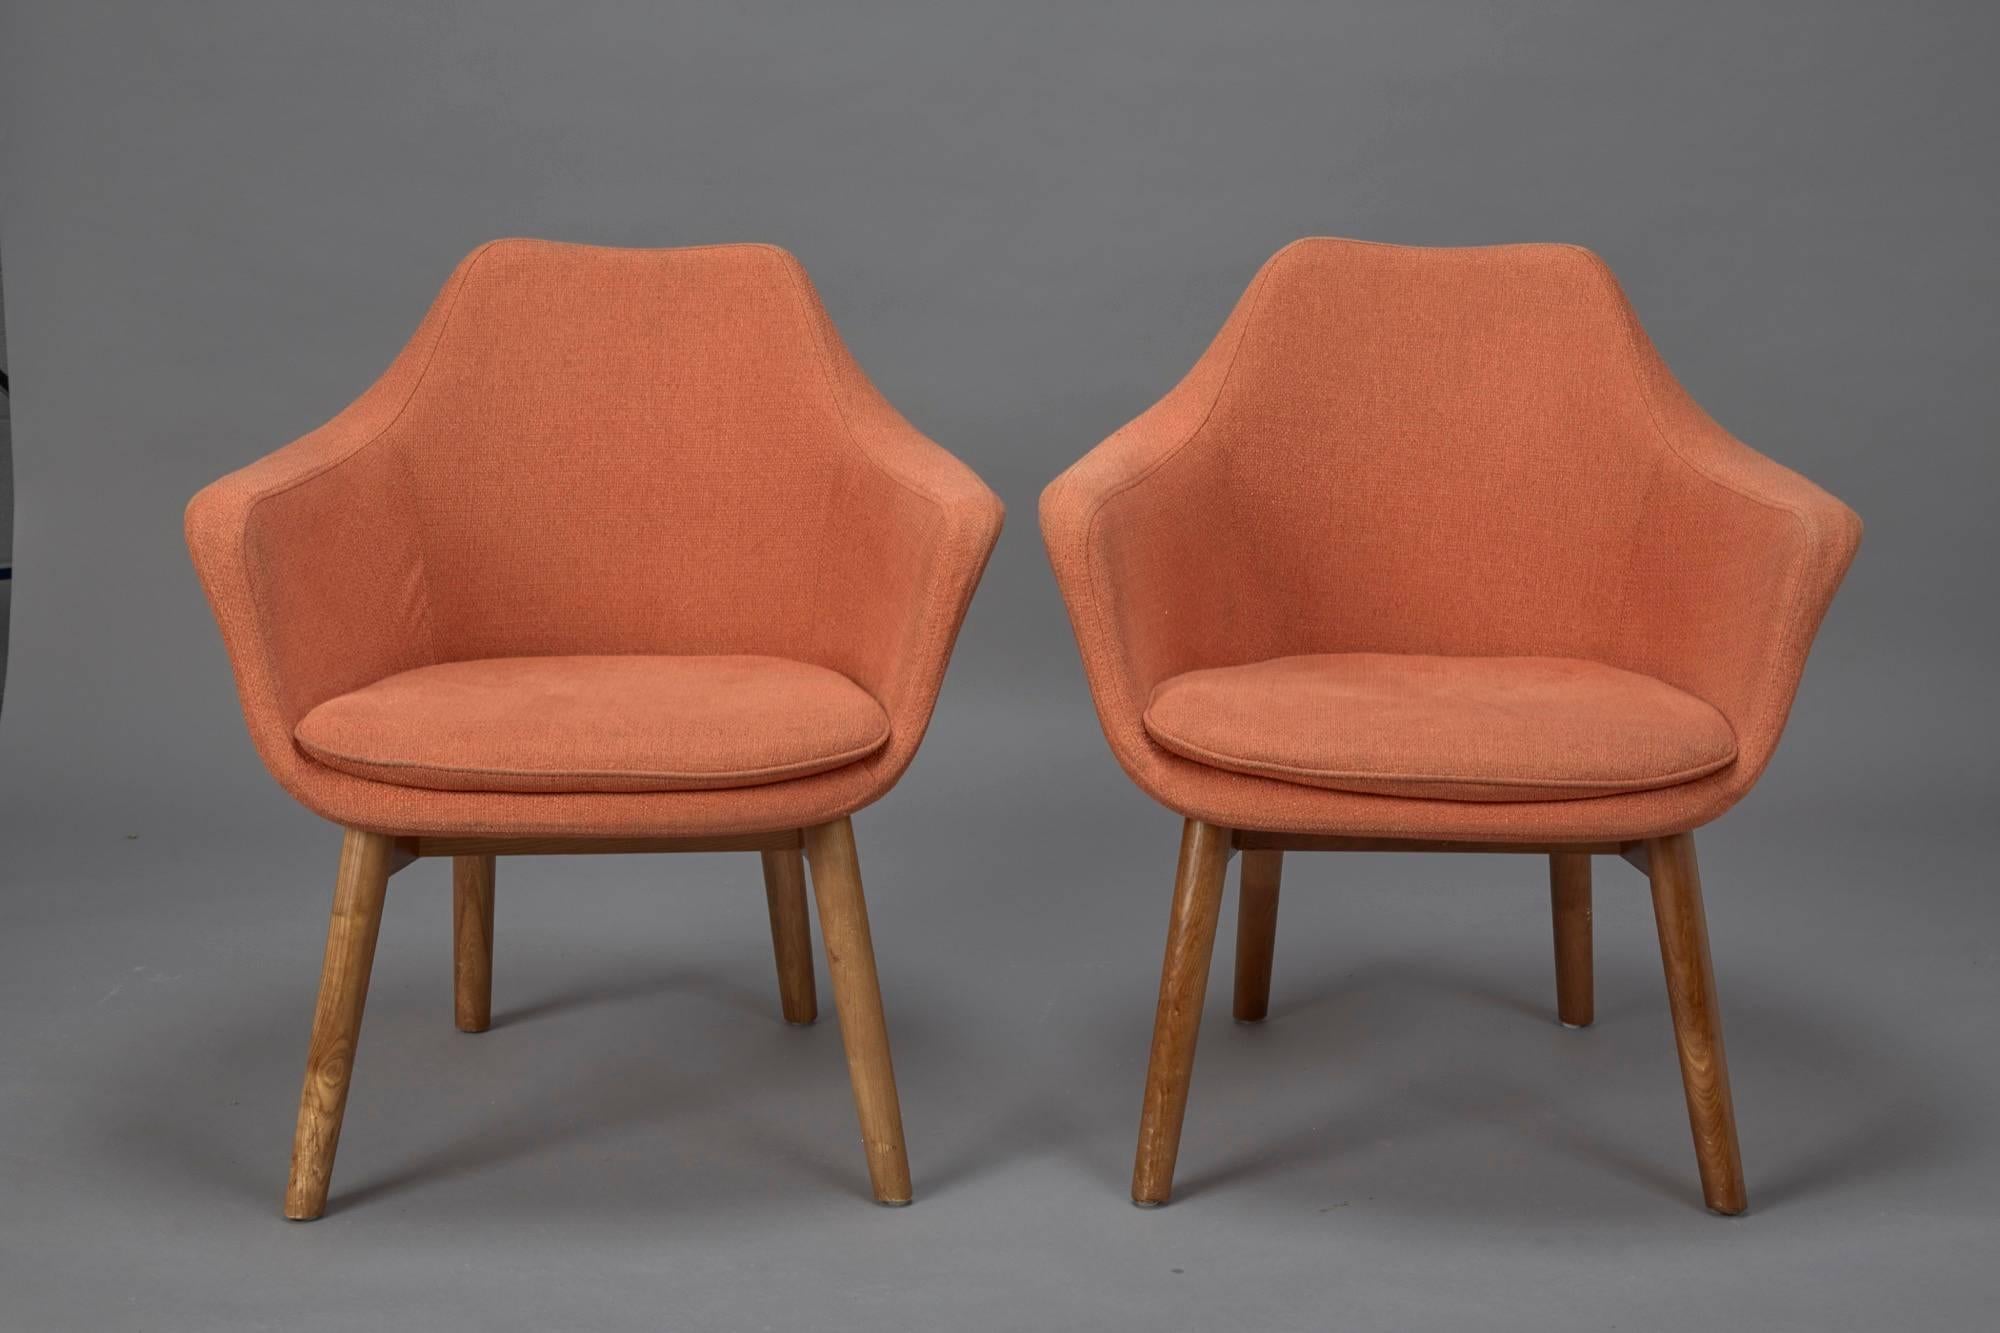 Pair of Mid-Century Modern armchairs in style of Eero Saarinen in original orange fabric.
   